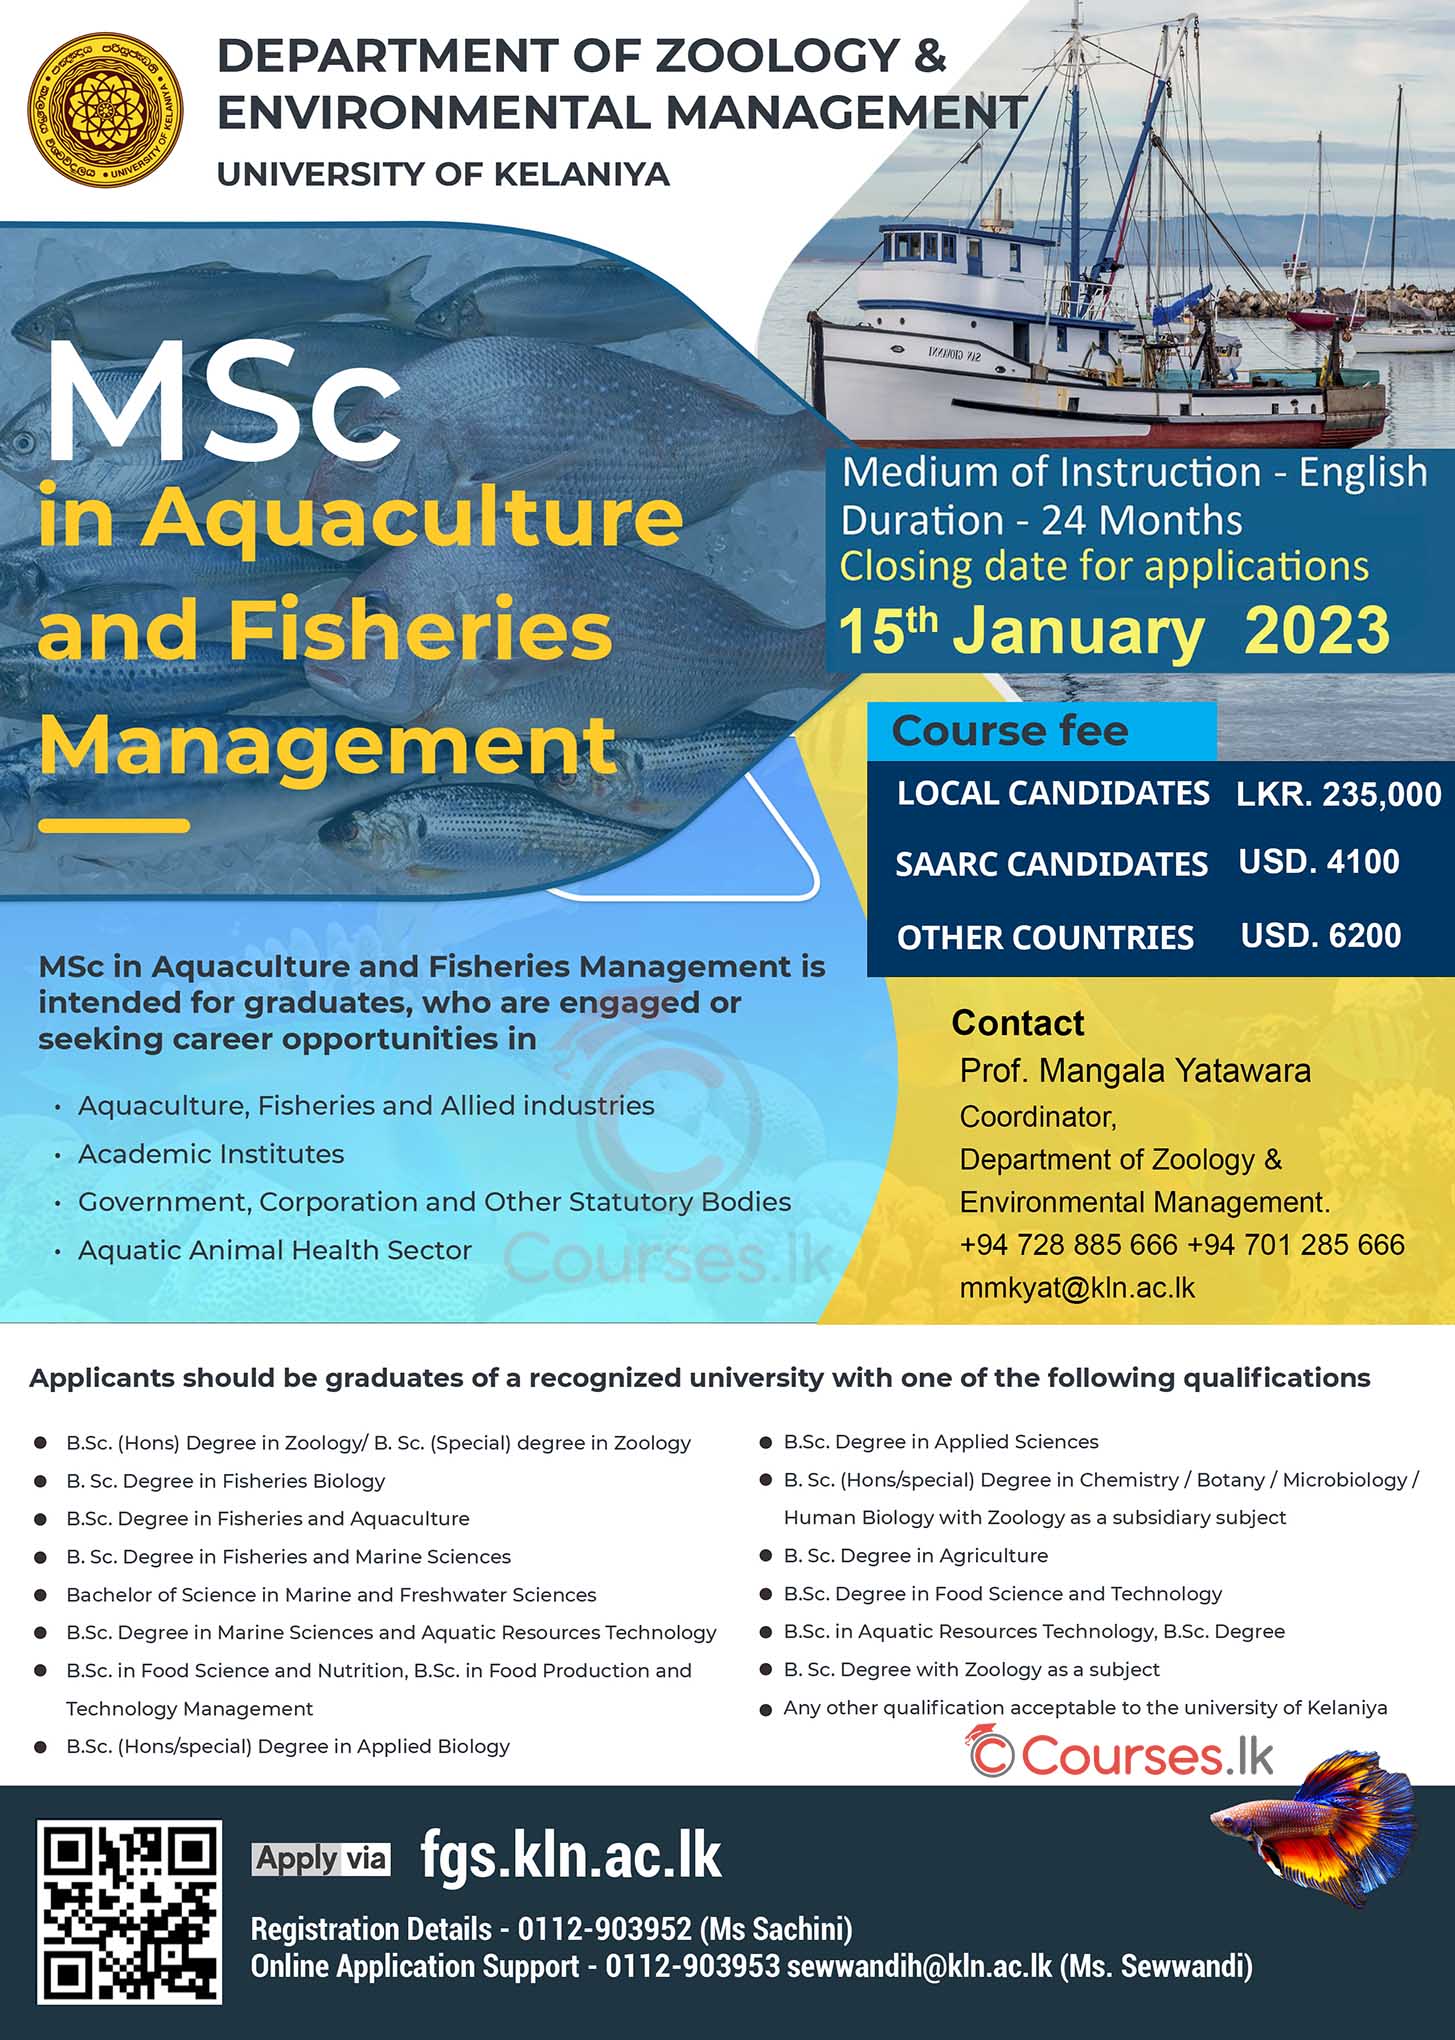 MSc in Aquaculture and Fisheries Management 2023 - University of Kelaniya